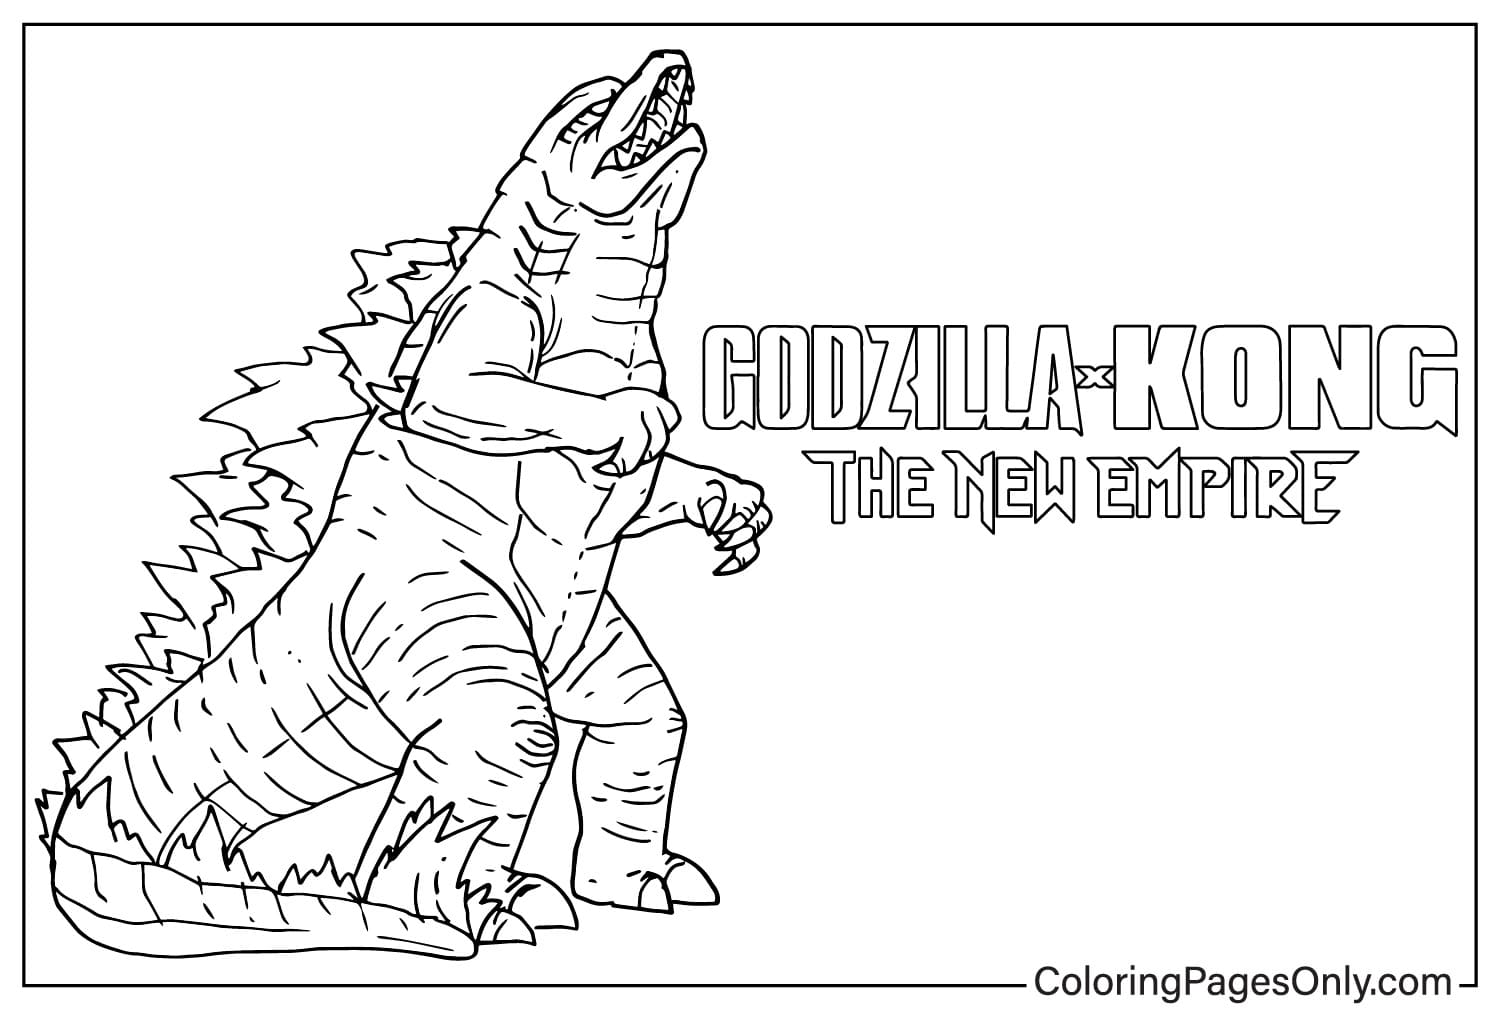 Godzilla Coloring Page from Godzilla x Kong: The New Empire